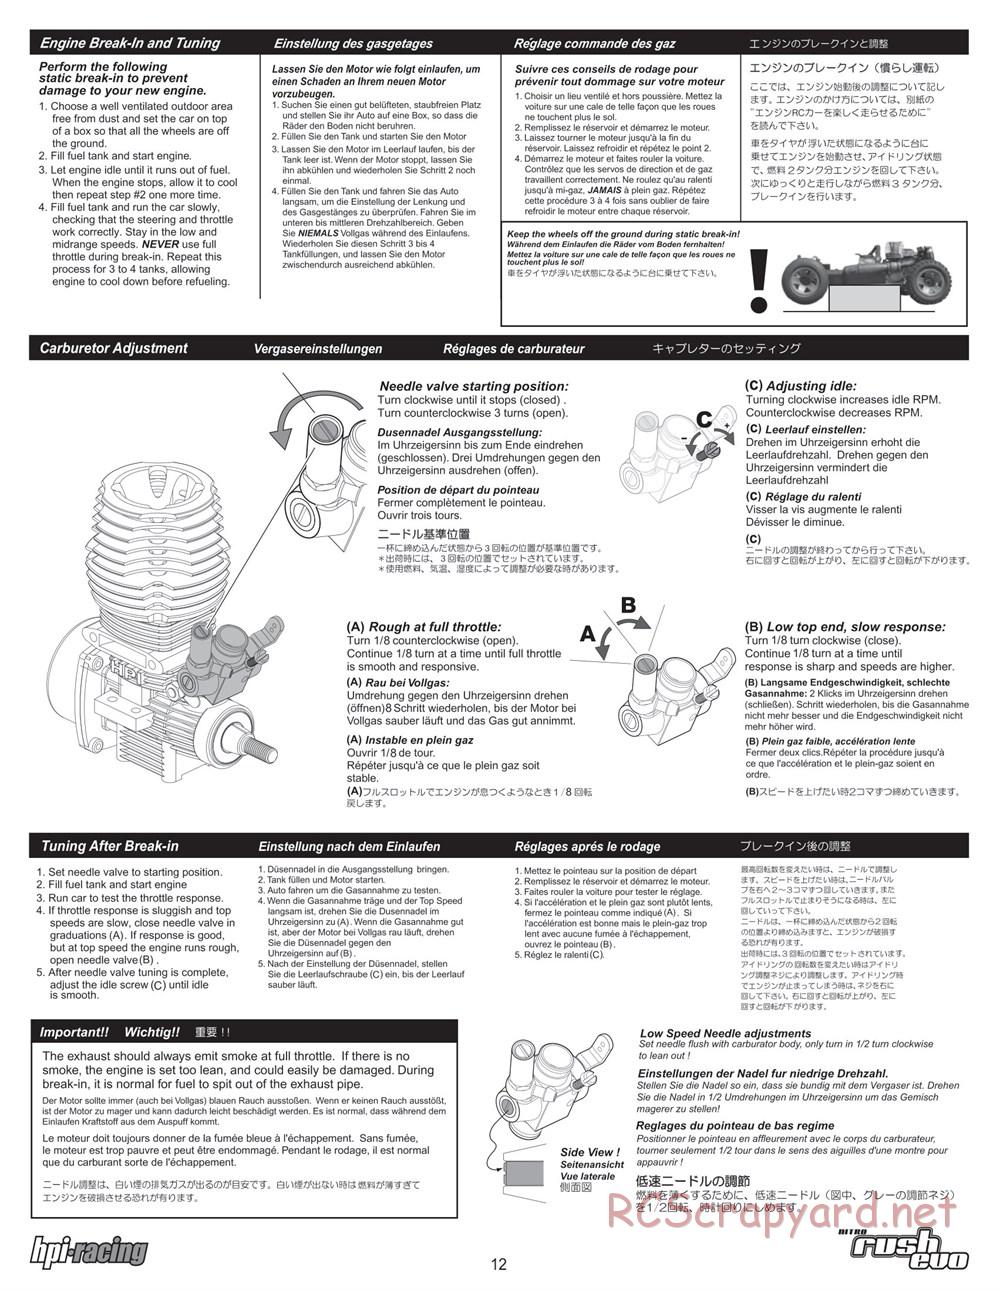 HPI - Nitro Rush Evo - Manual - Page 12